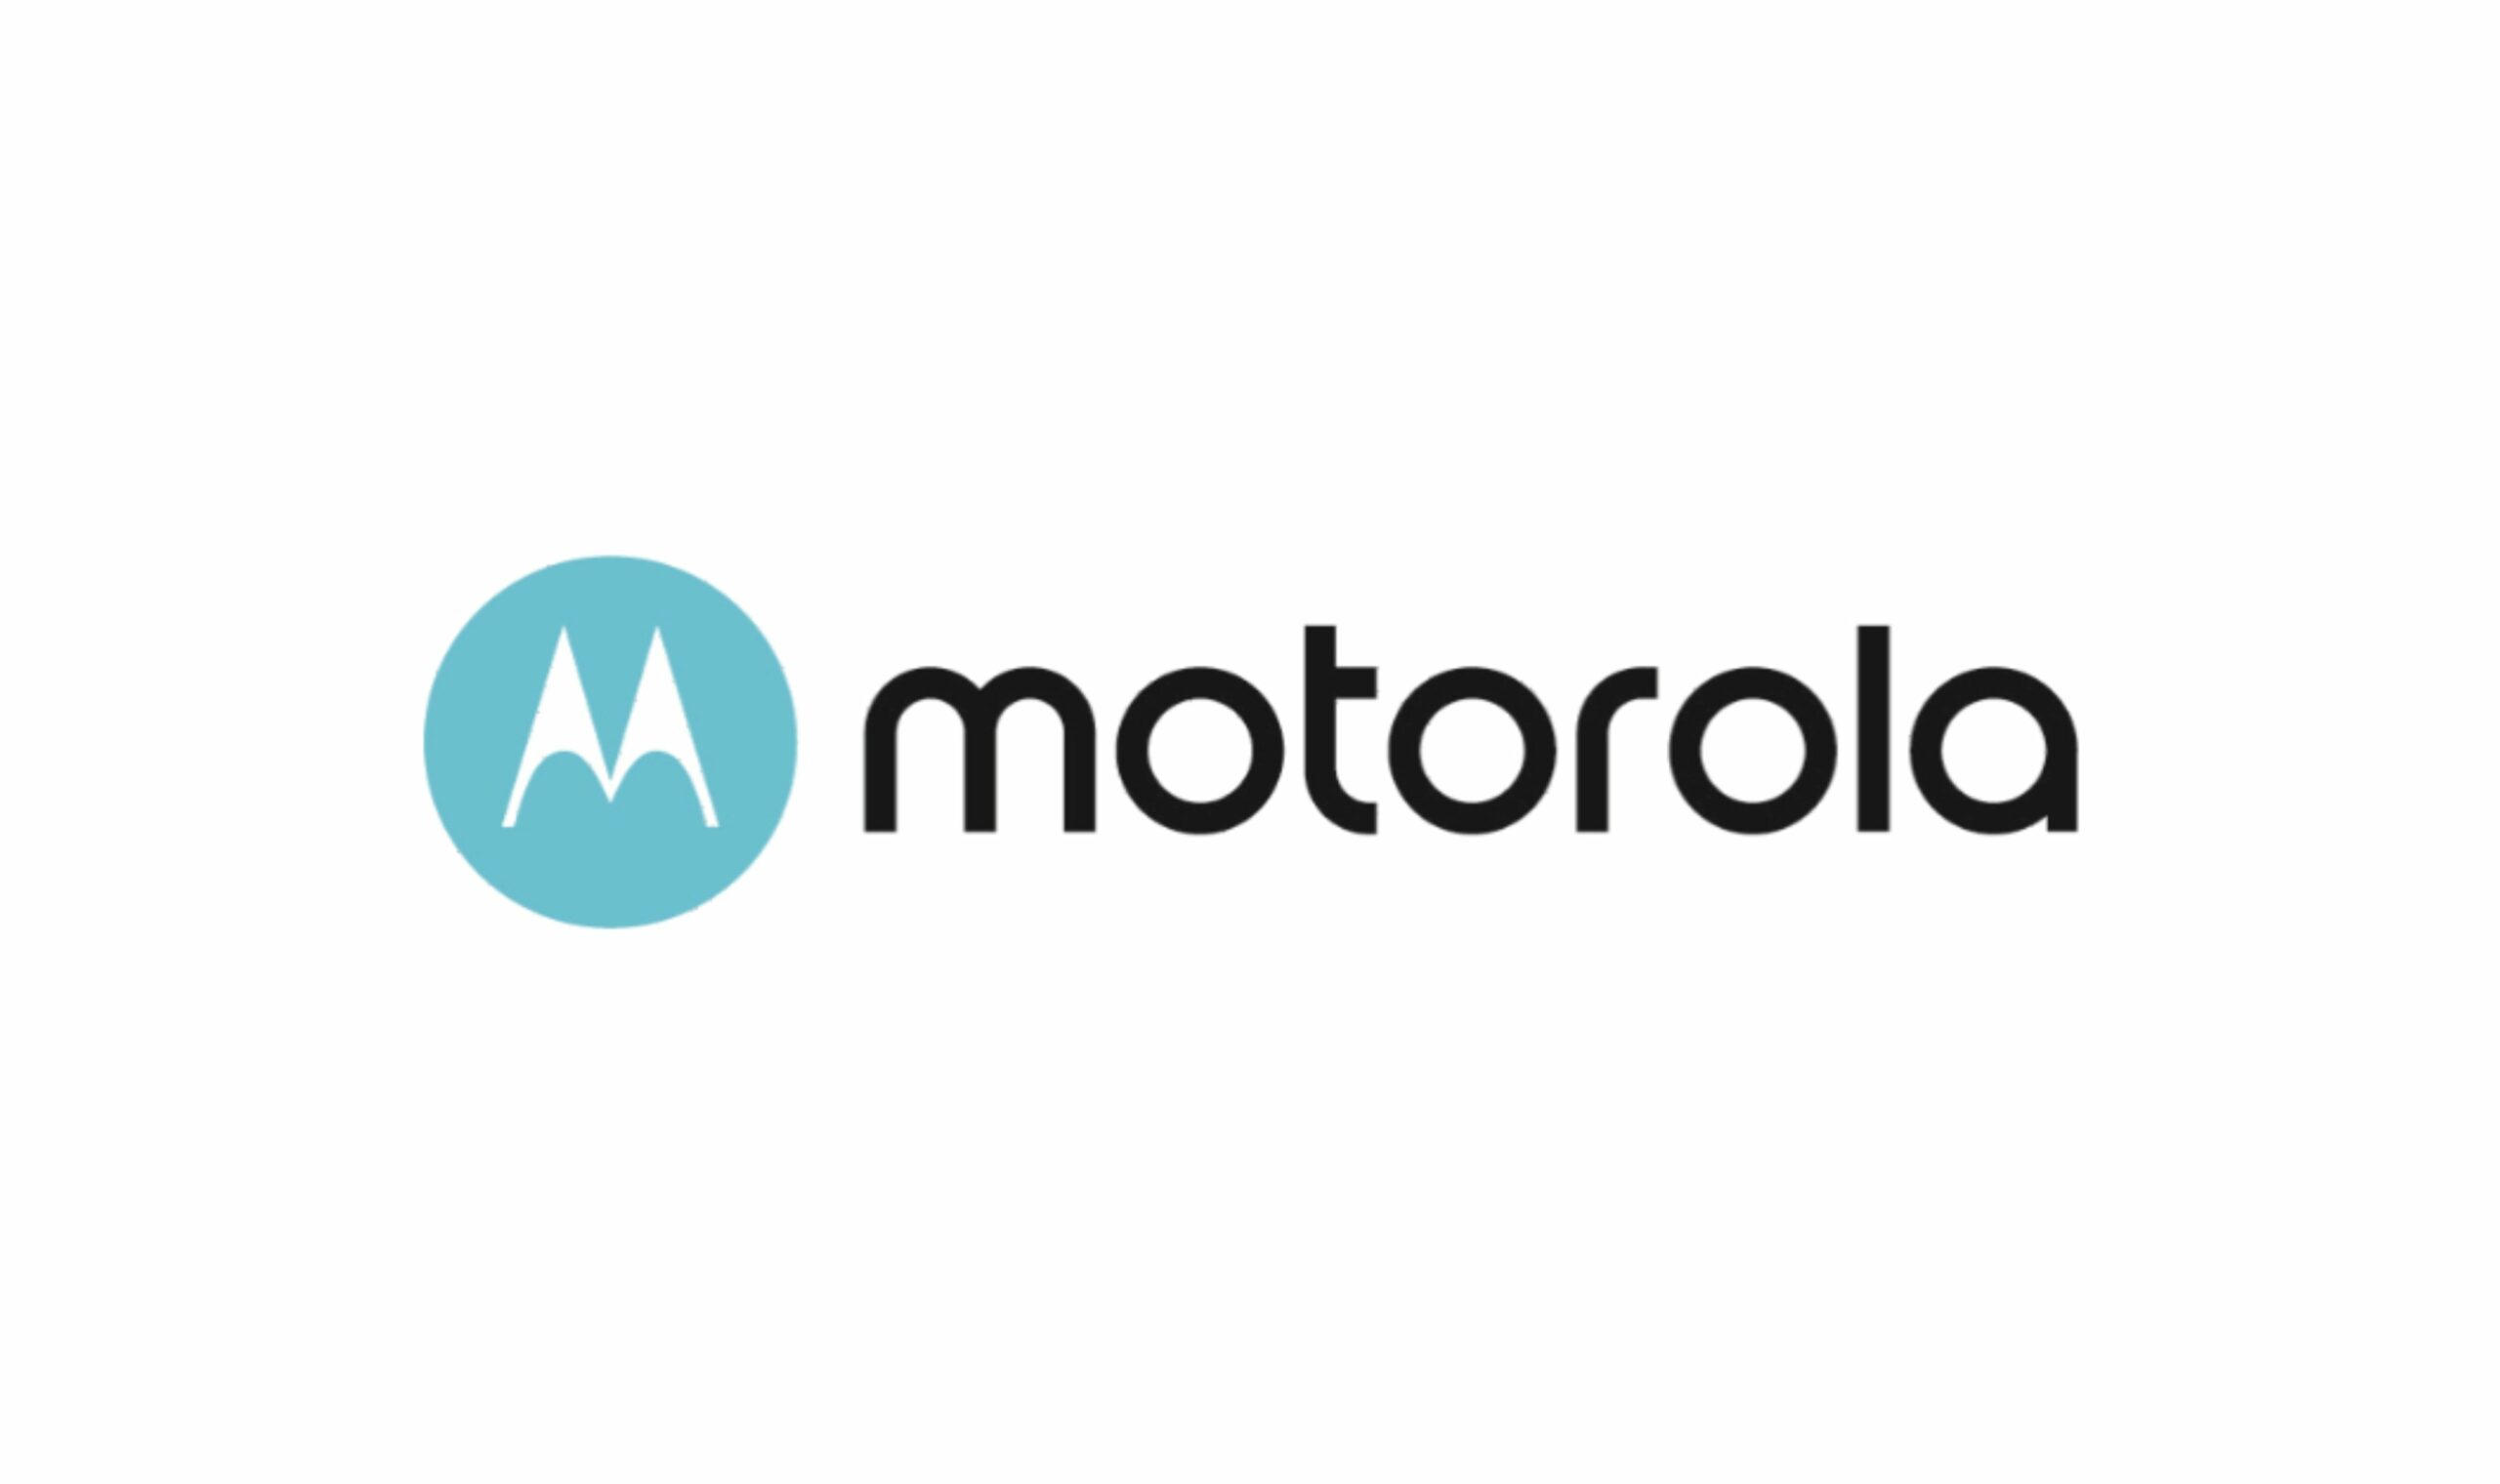 Motorola logotips Featured